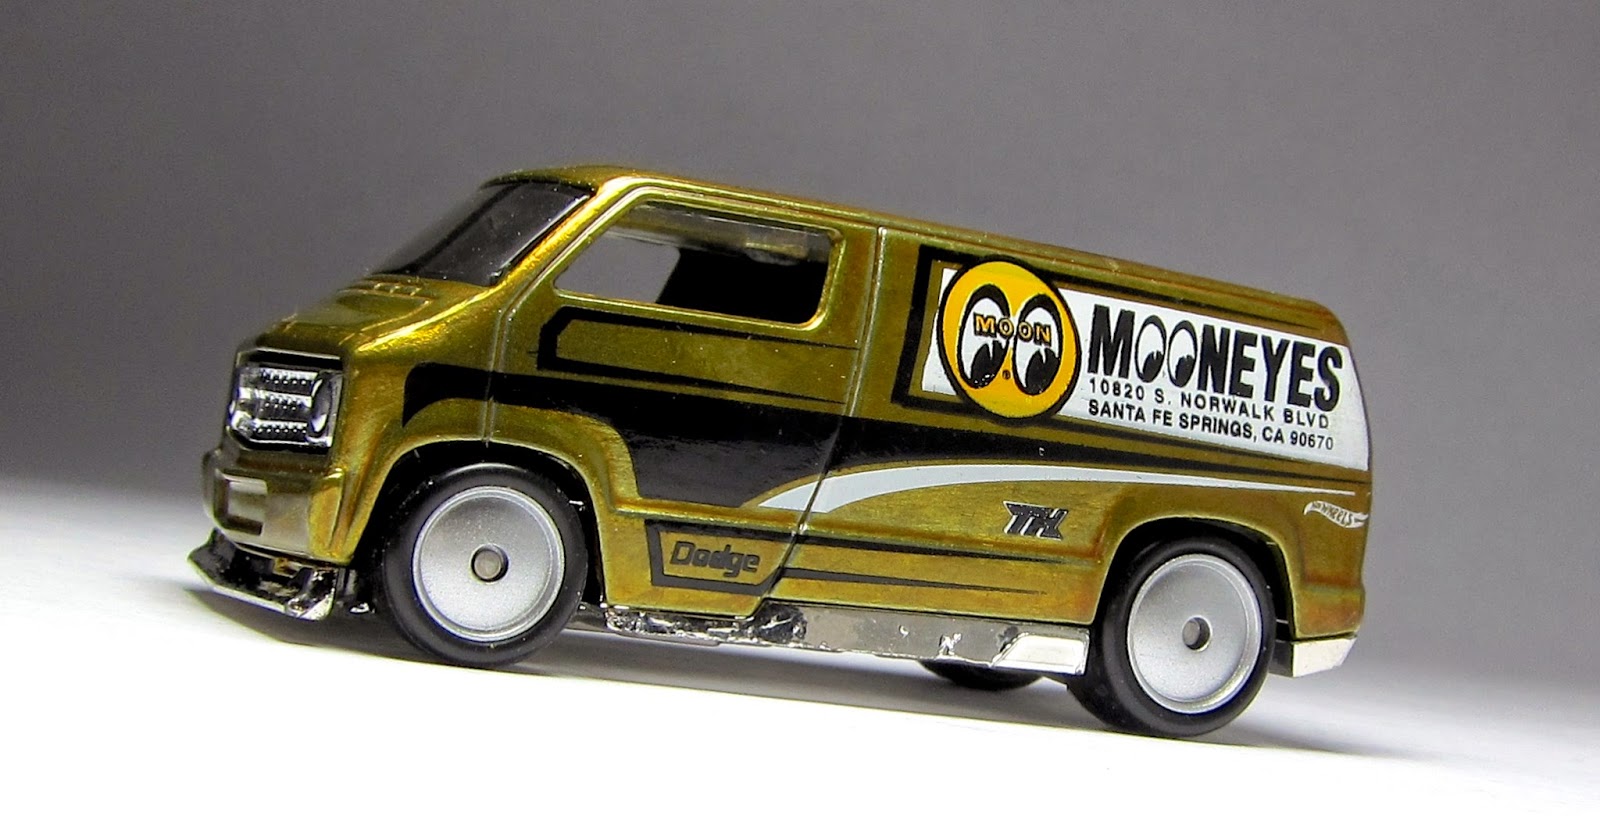 Why we think the Mooneyes Custom '77 Dodge Van is one of the best Supe...